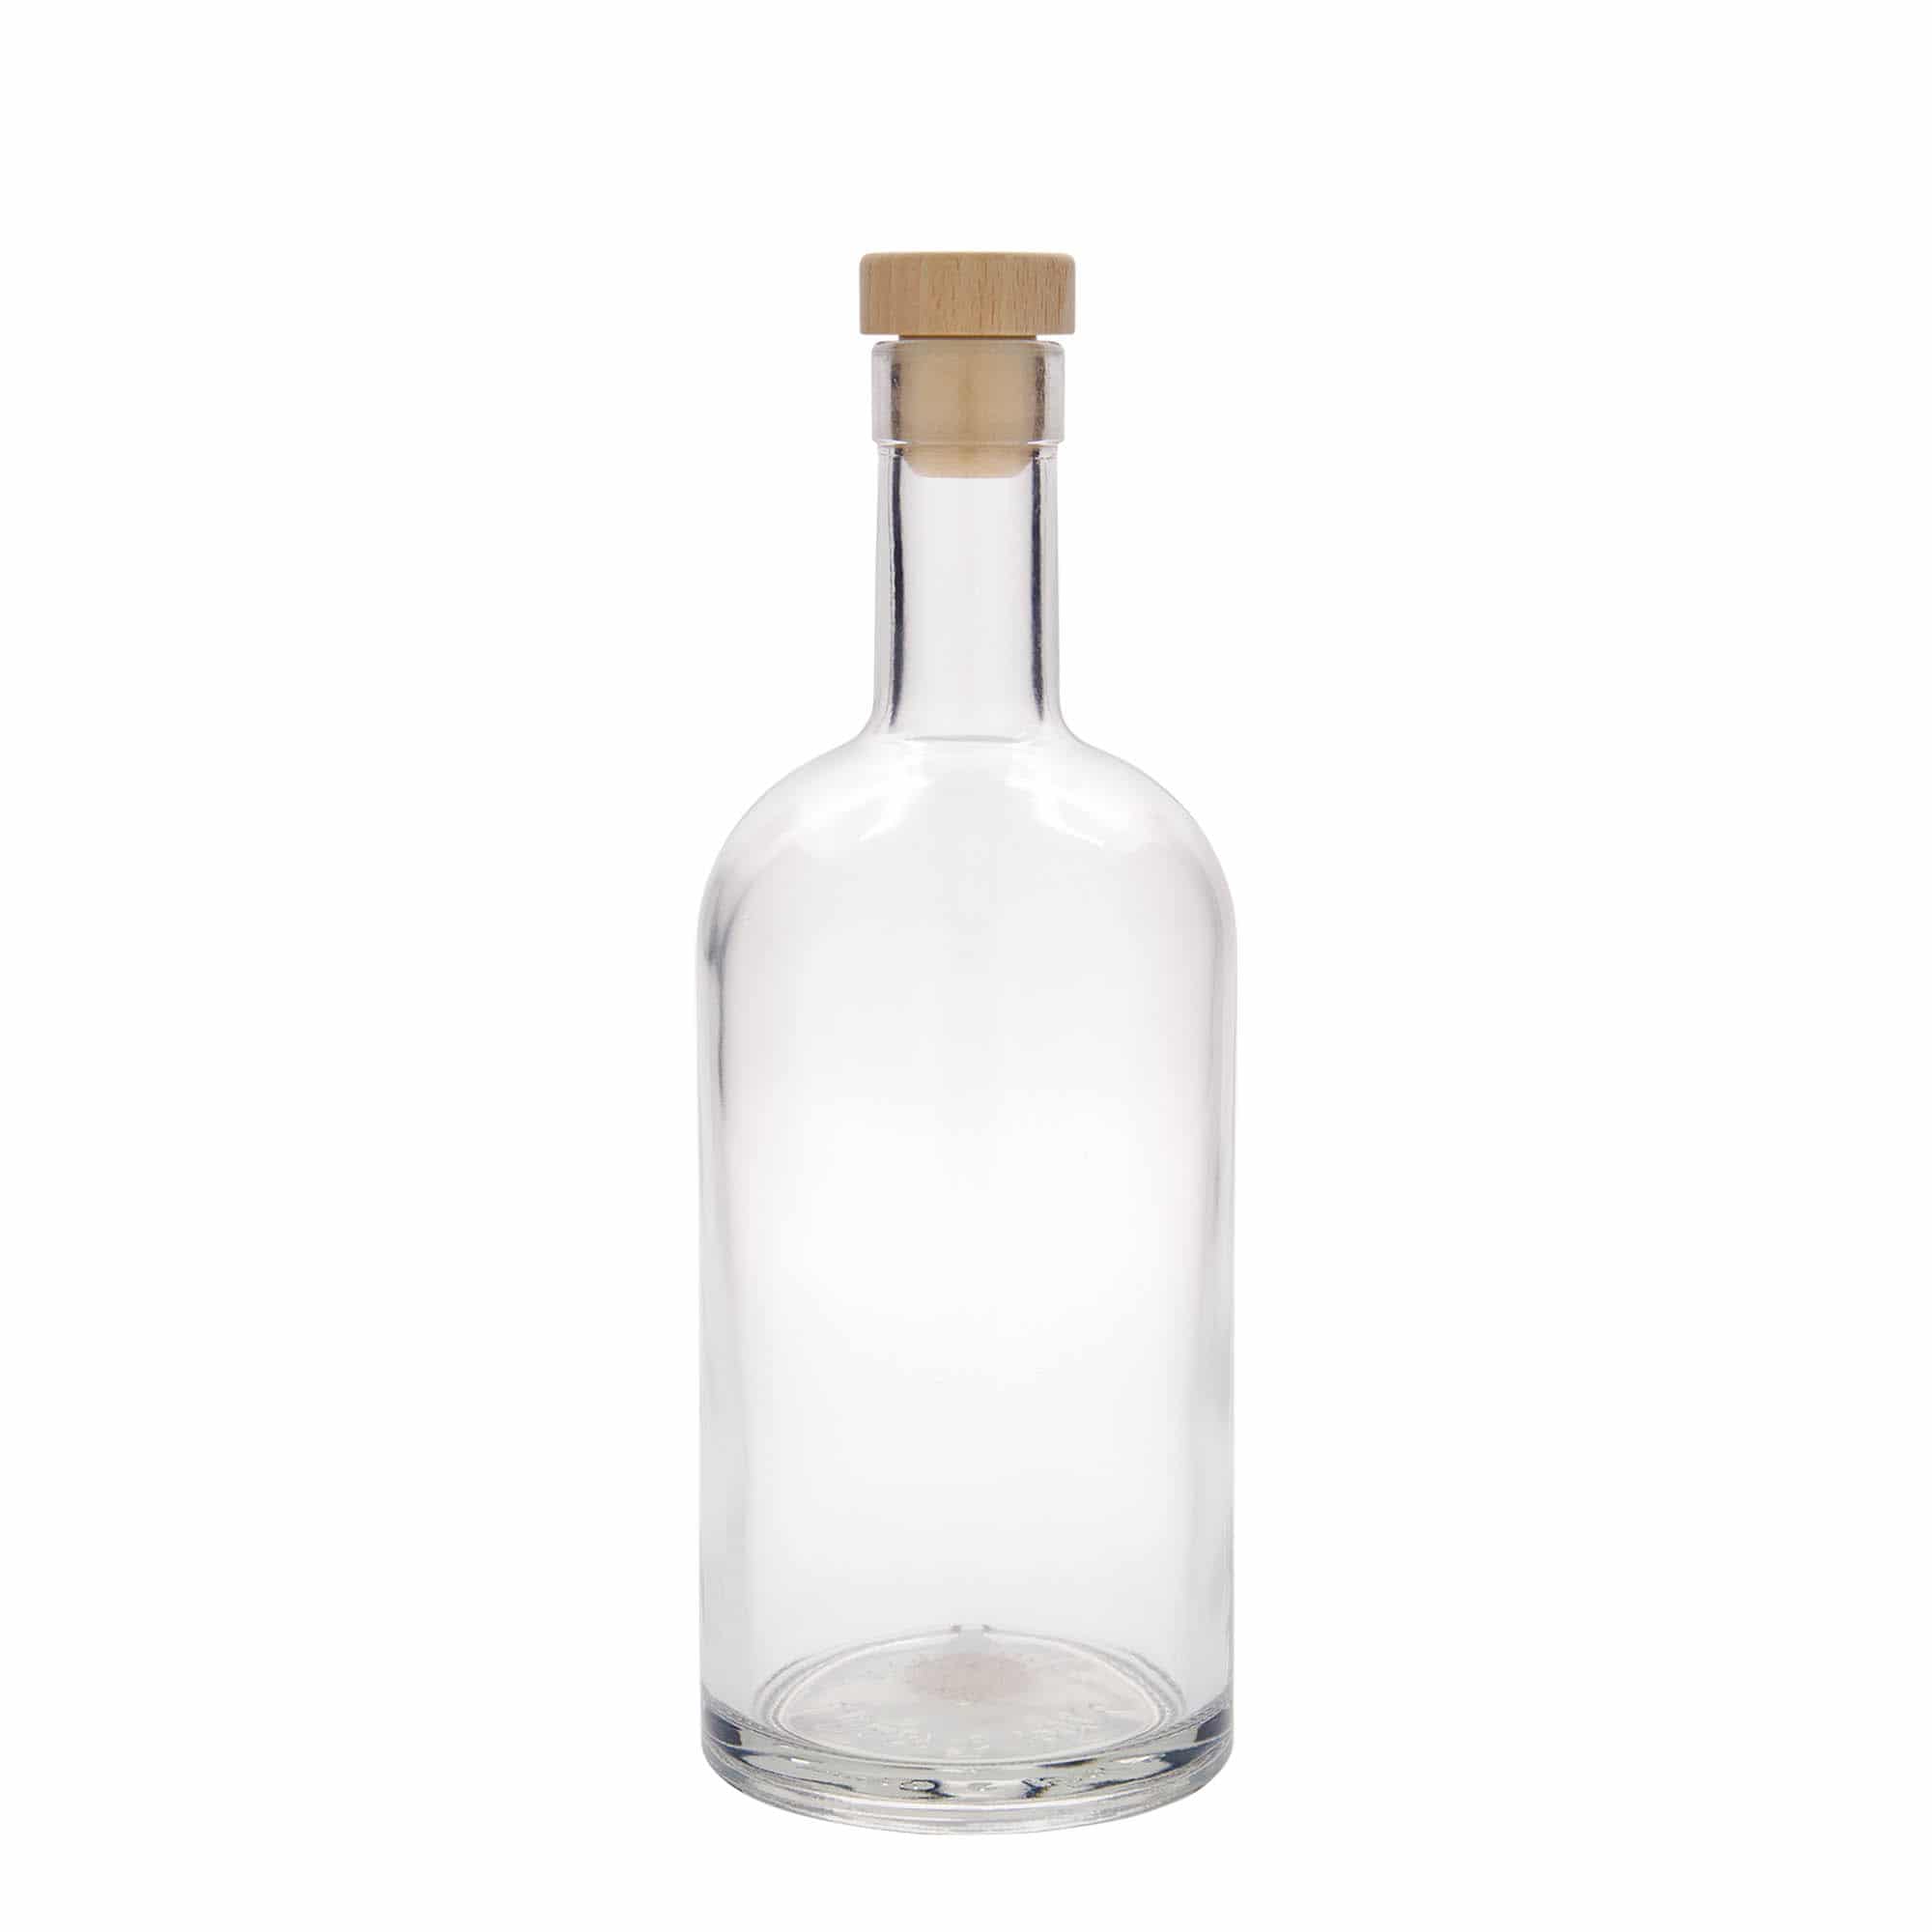 700 ml glass bottle 'Franco', closure: cork